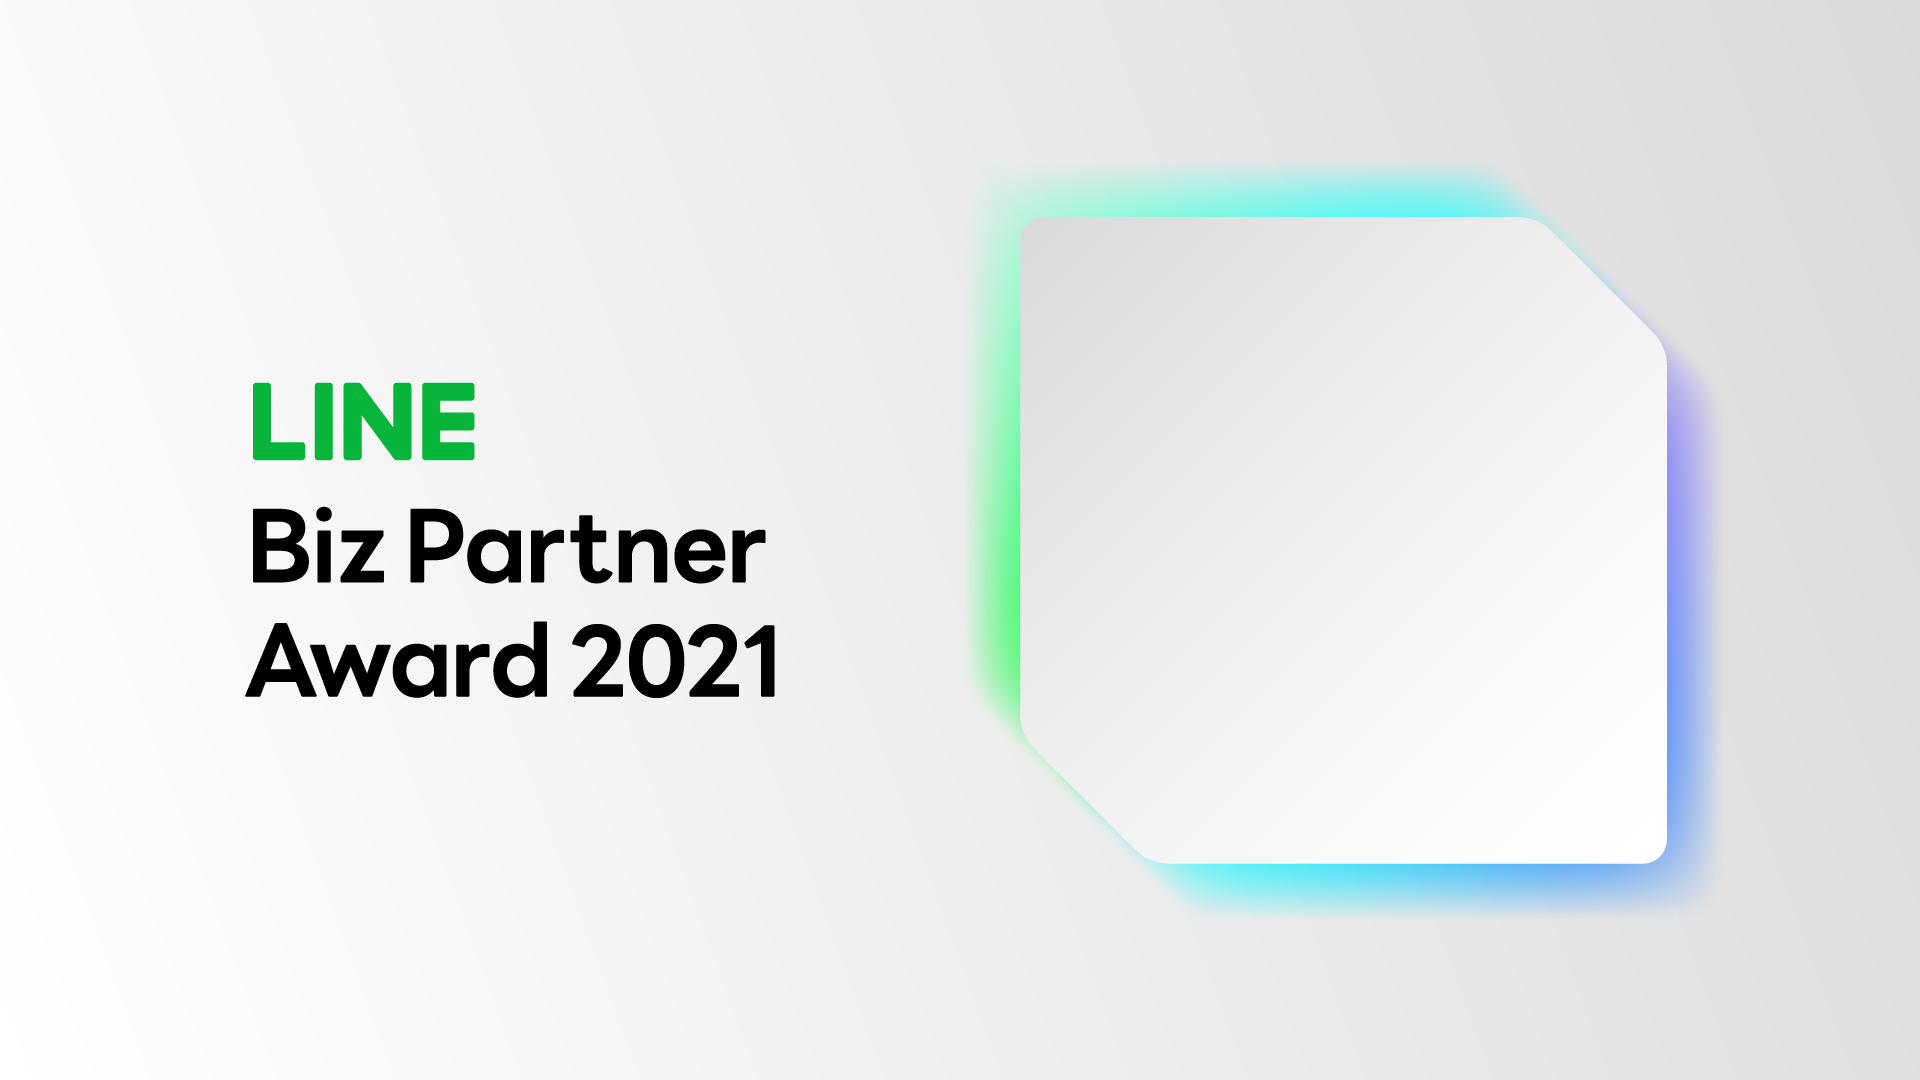 LINE Biz Partner Award 2021